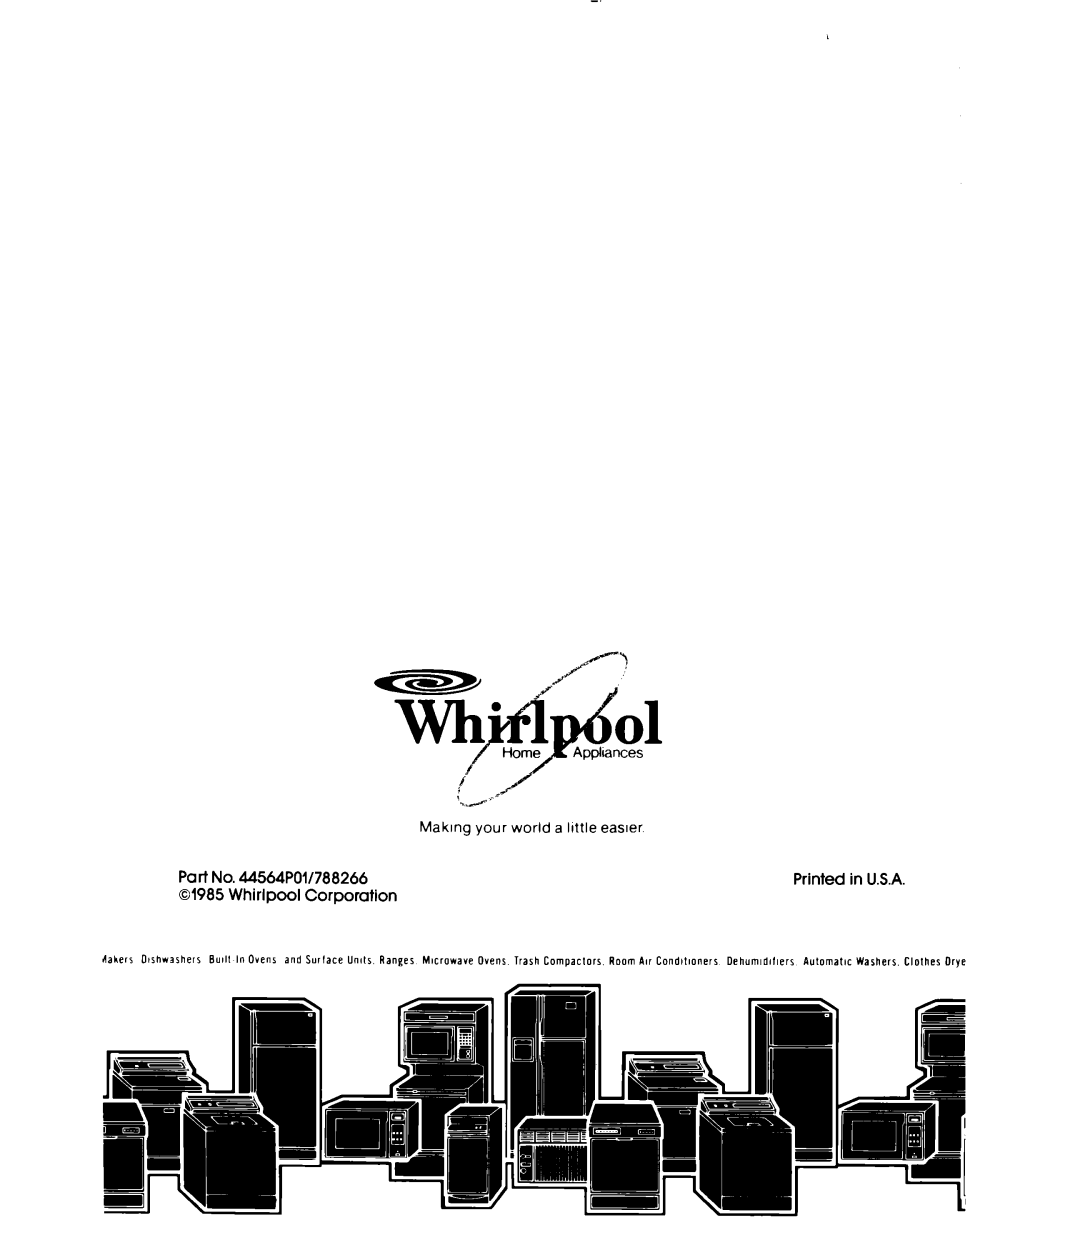 Whirlpool MW1000XP manual Whirlpool, dakrs Otshwashers, In Ovens, Dehumidlliers, Automatic, Washers. Clothes Orye, Eu~lt 